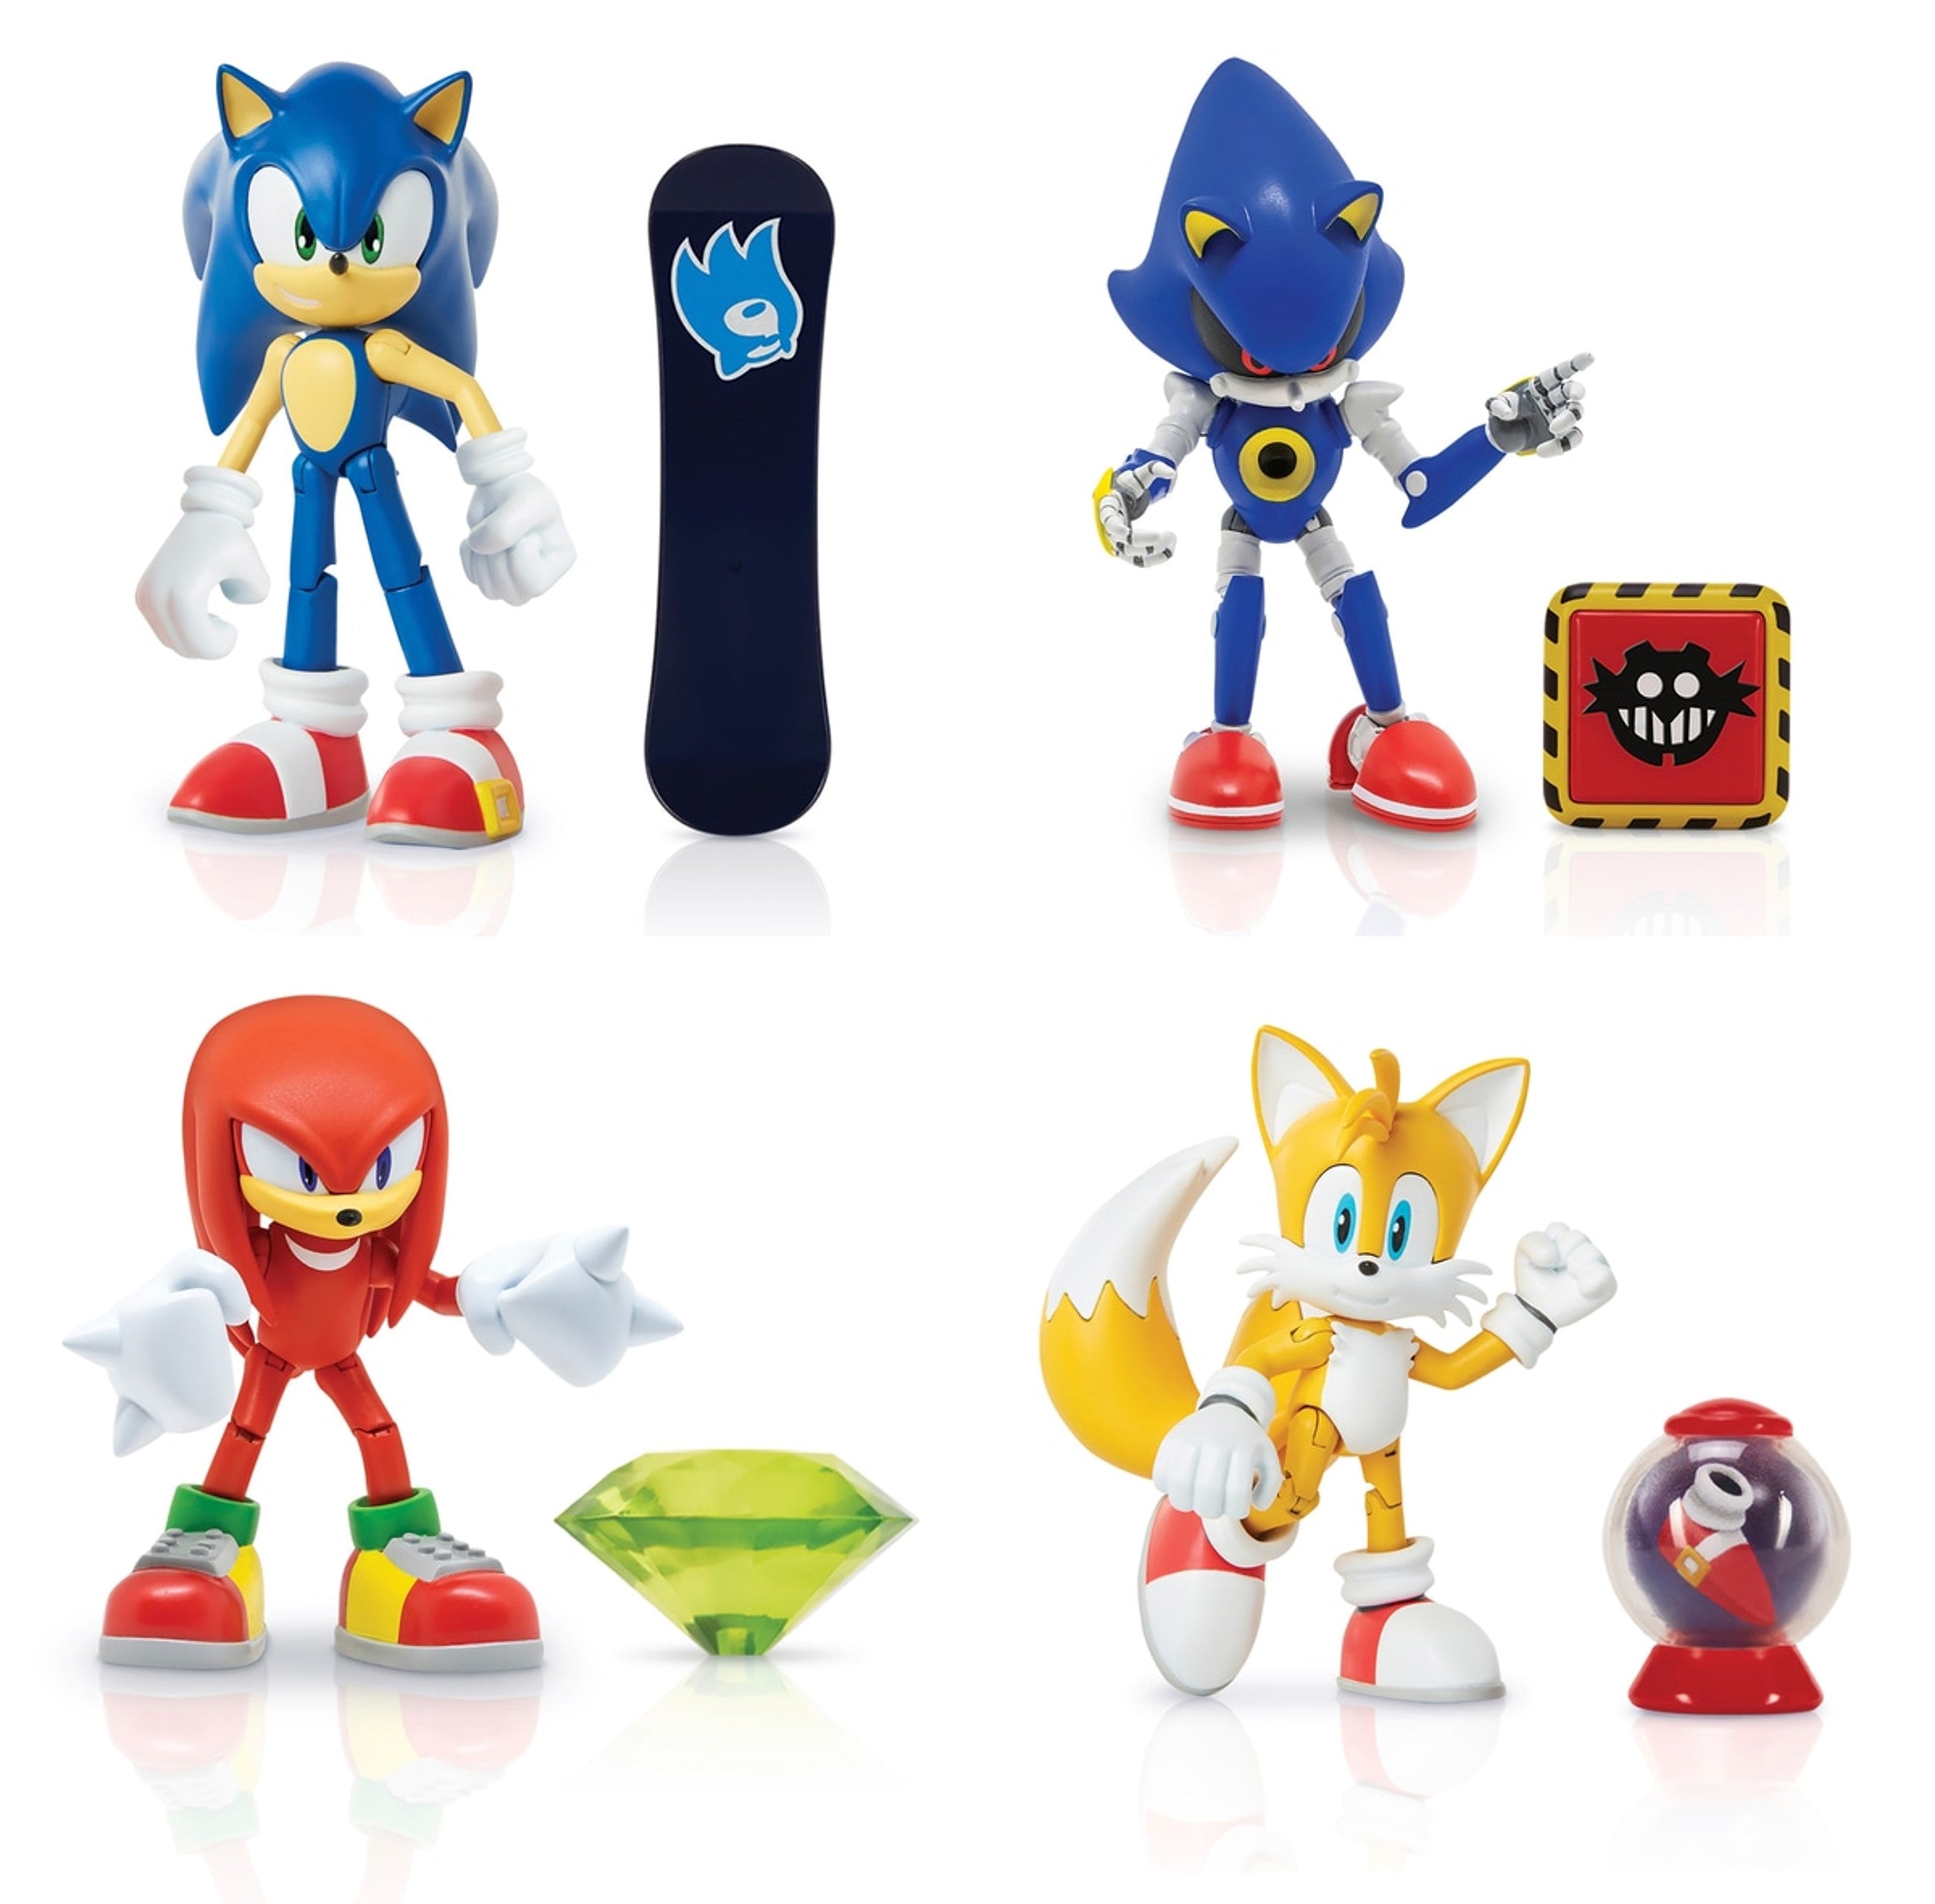 Sonic the Hedgehog 2 4 Wave 2 Set of 4 Figures